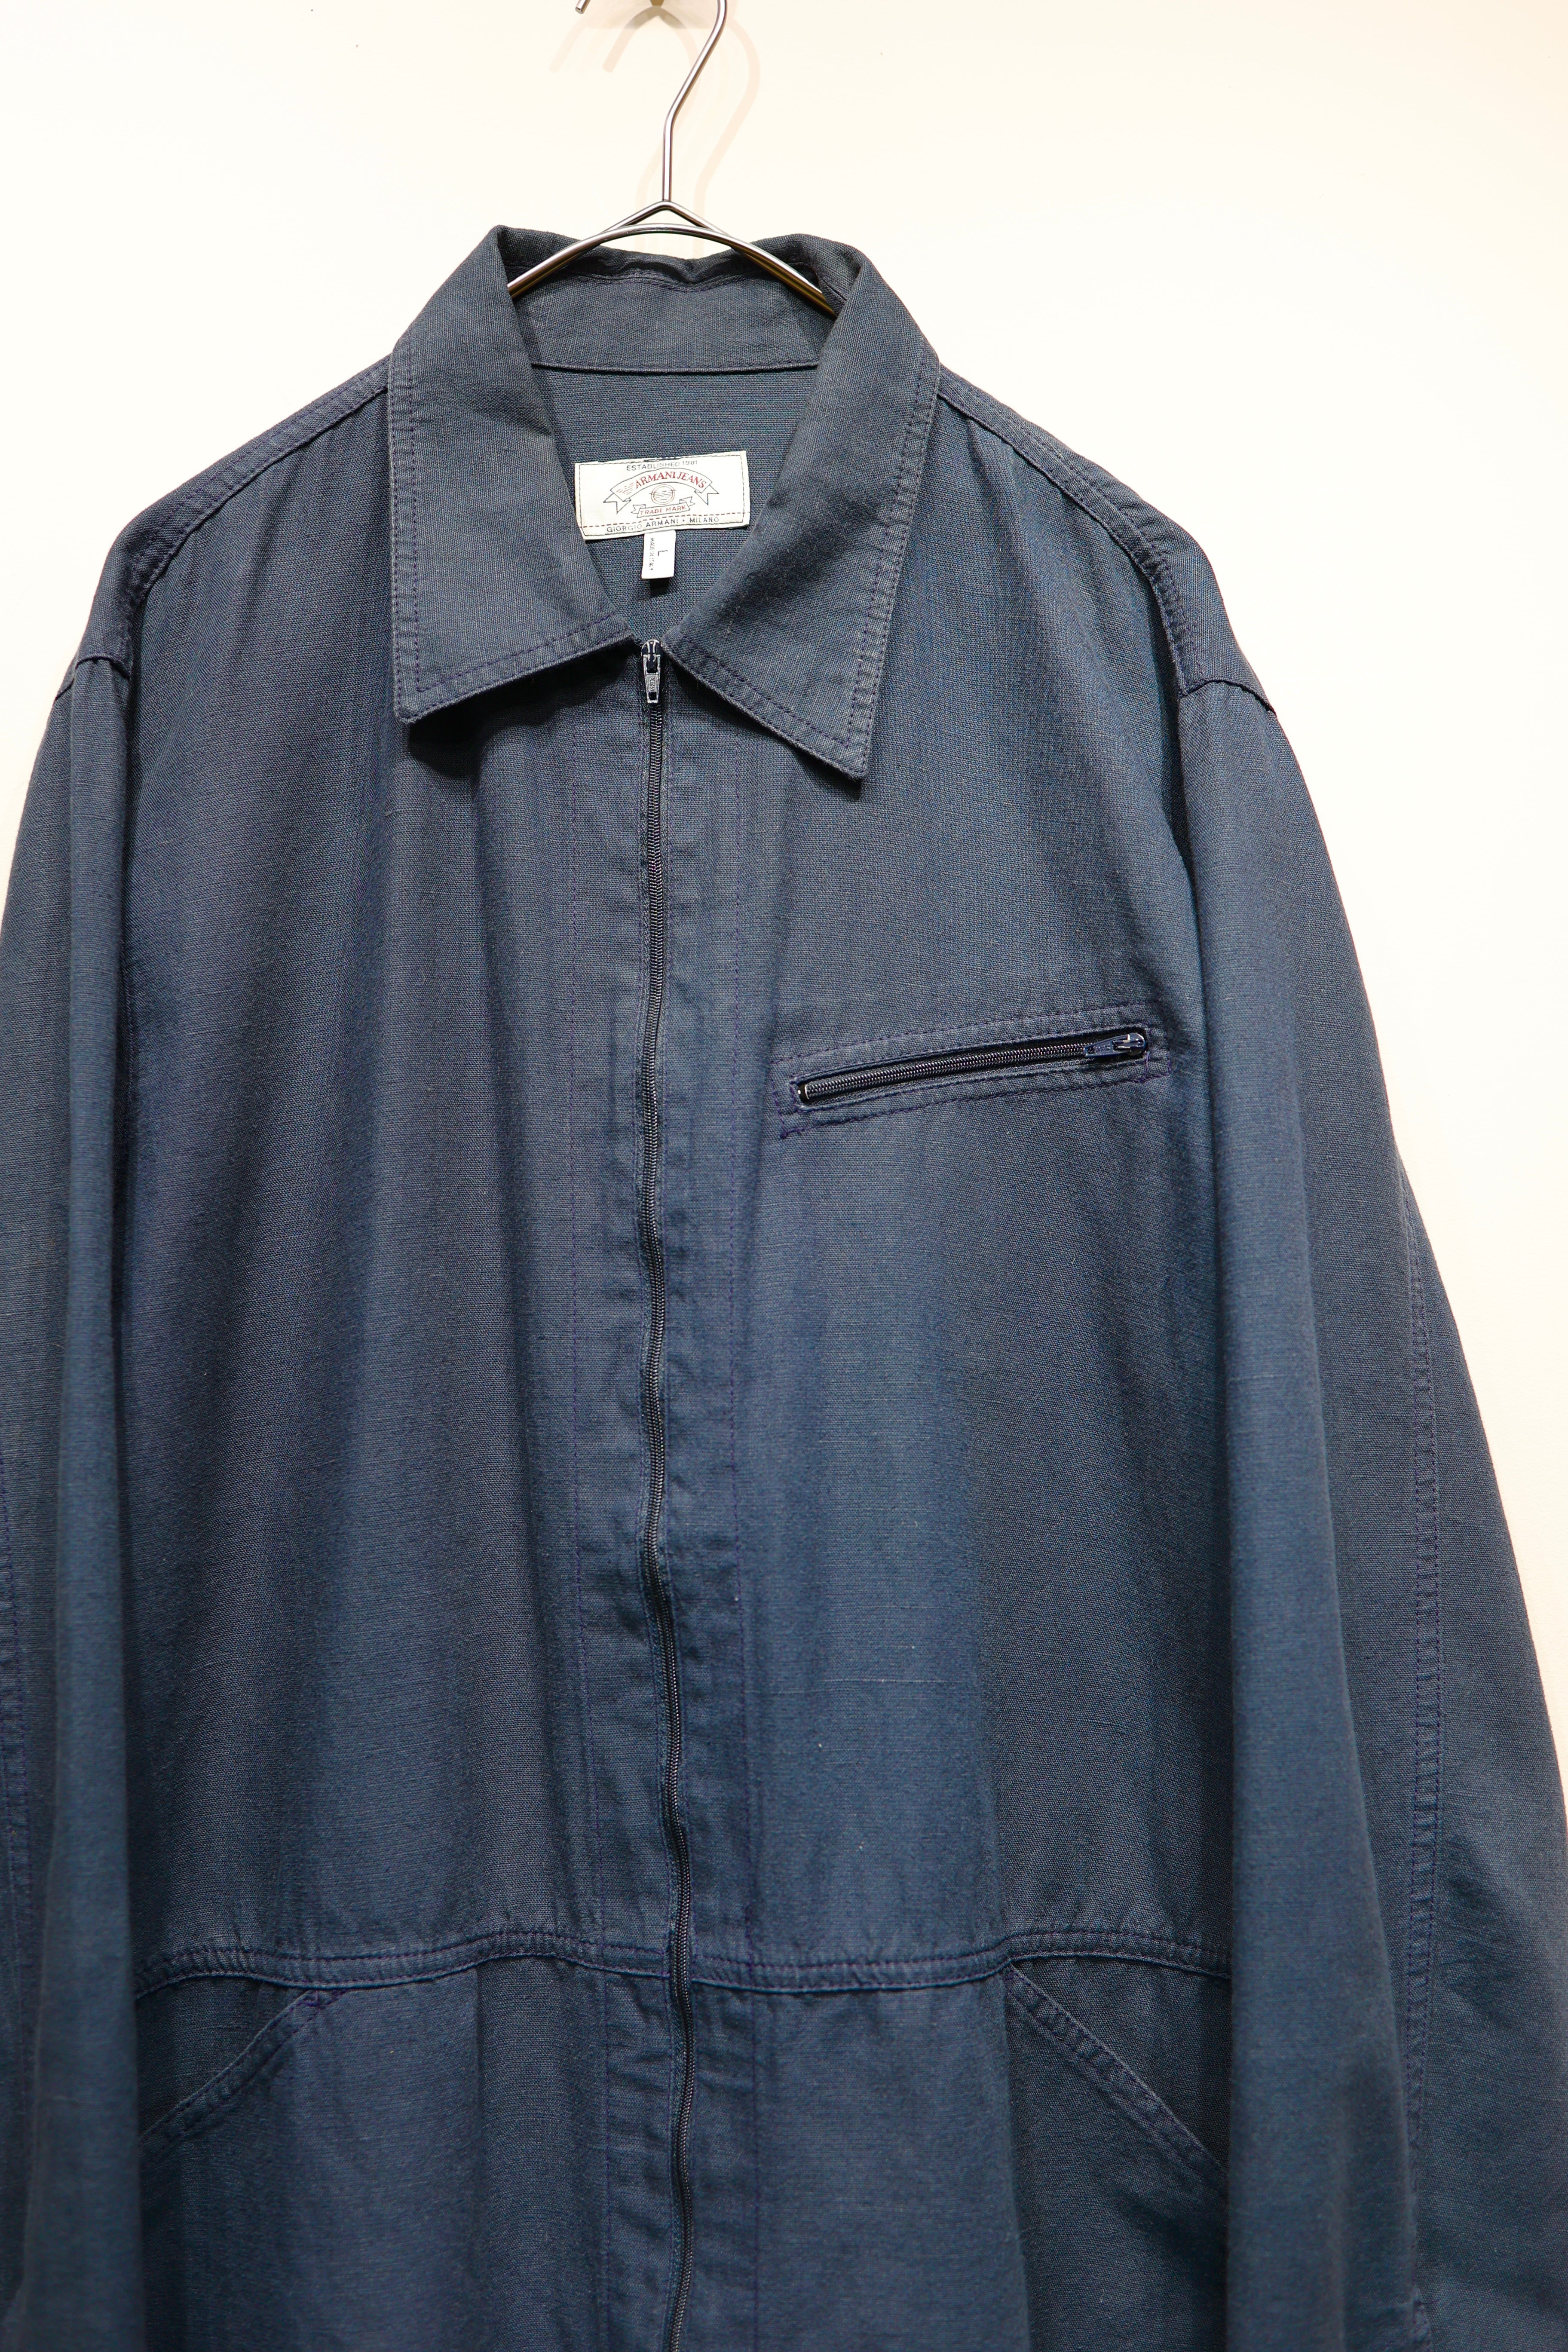 ARMANI JEANS cotton/hemp shirt-jacket